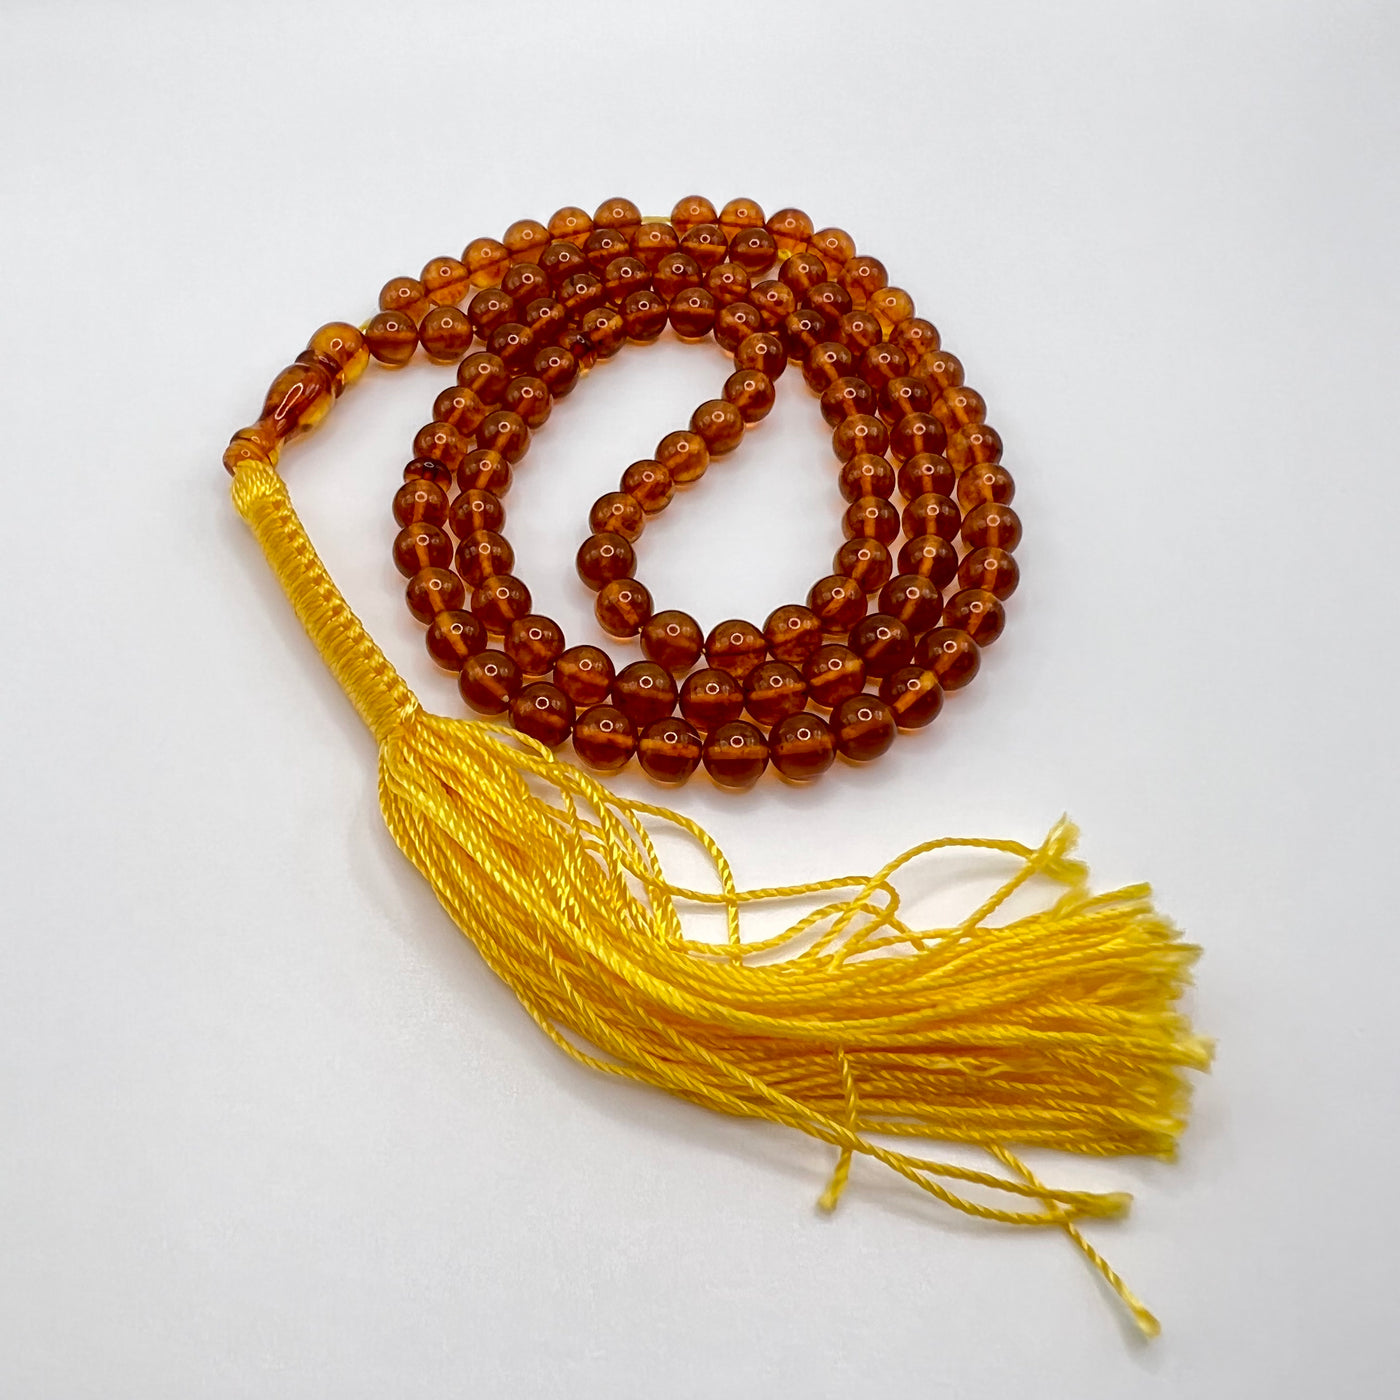 Round Shape Kahraman Amber Tasbih 99 Beads - Al Ali Gems